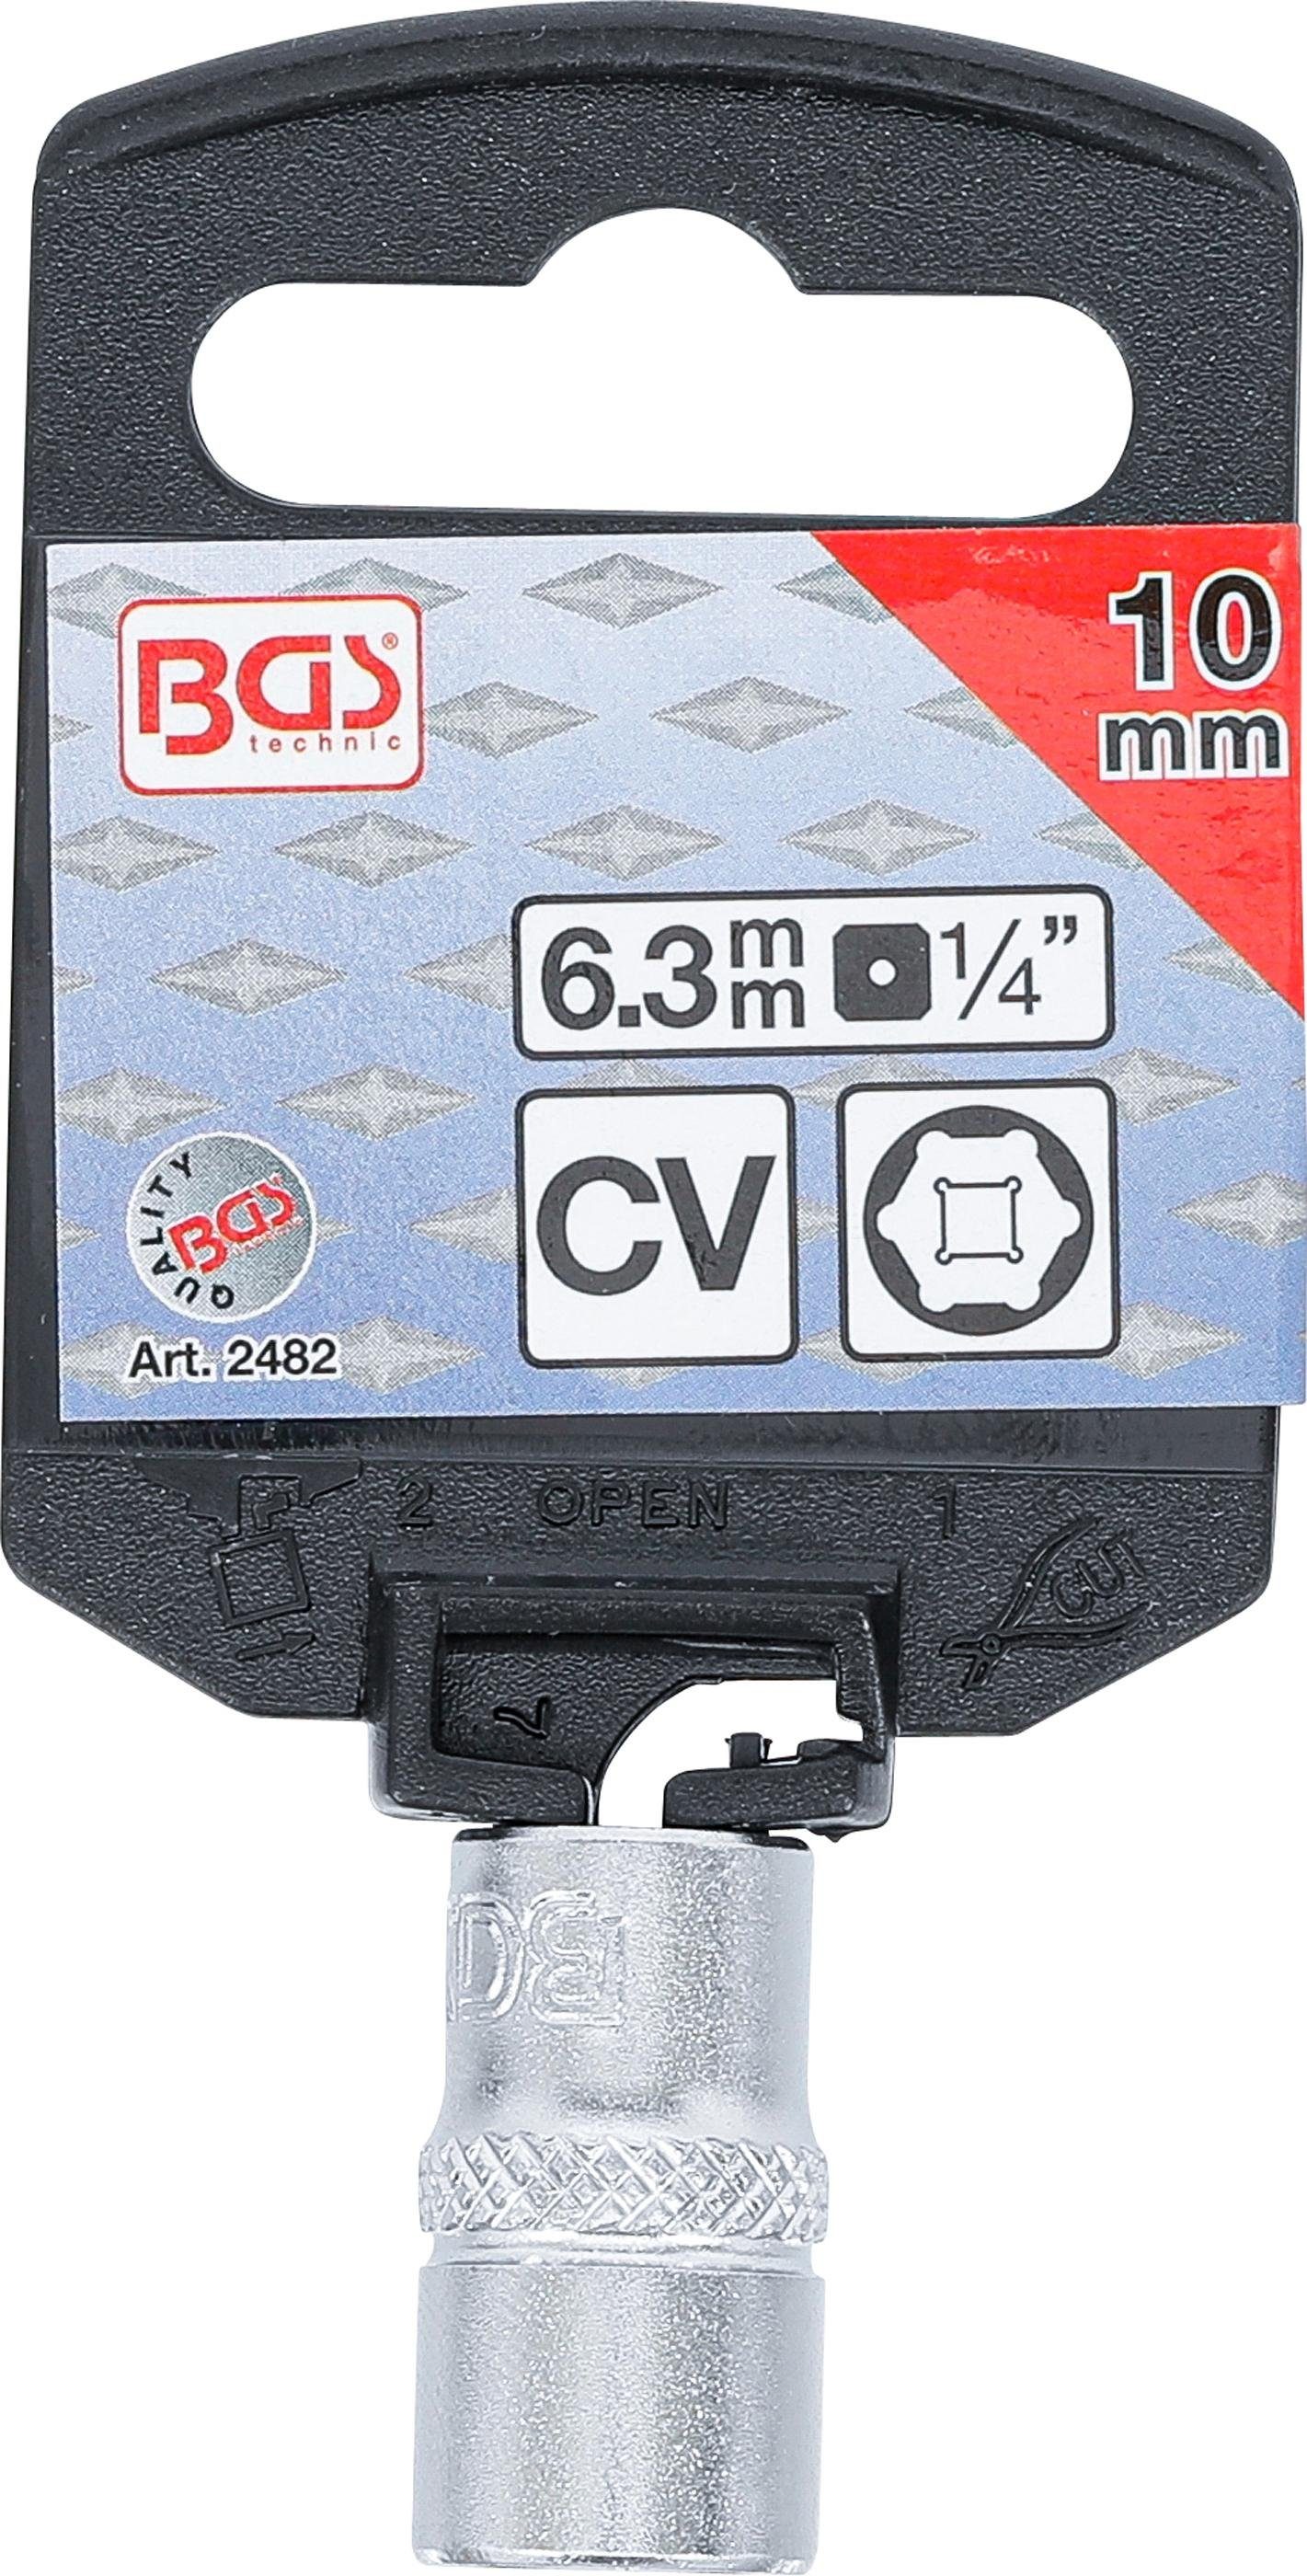 BGS technic Steckschlüssel Steckschlüssel-Einsatz Innenvierkant (1/4), mm 10 6,3 Sechskant, mm Antrieb SW